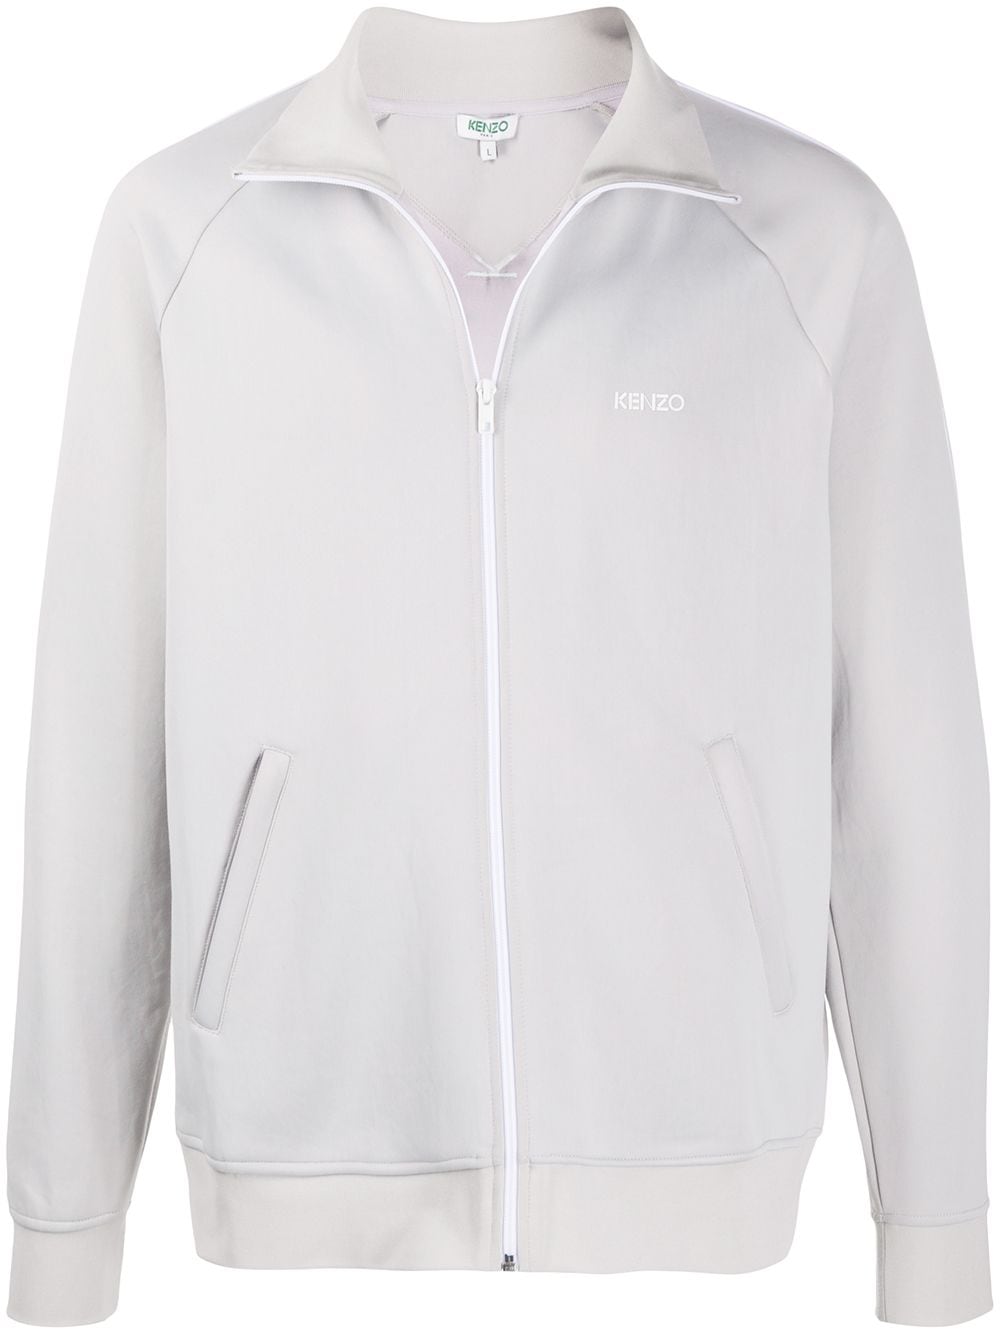 Shop Kenzo logo track jacket with 